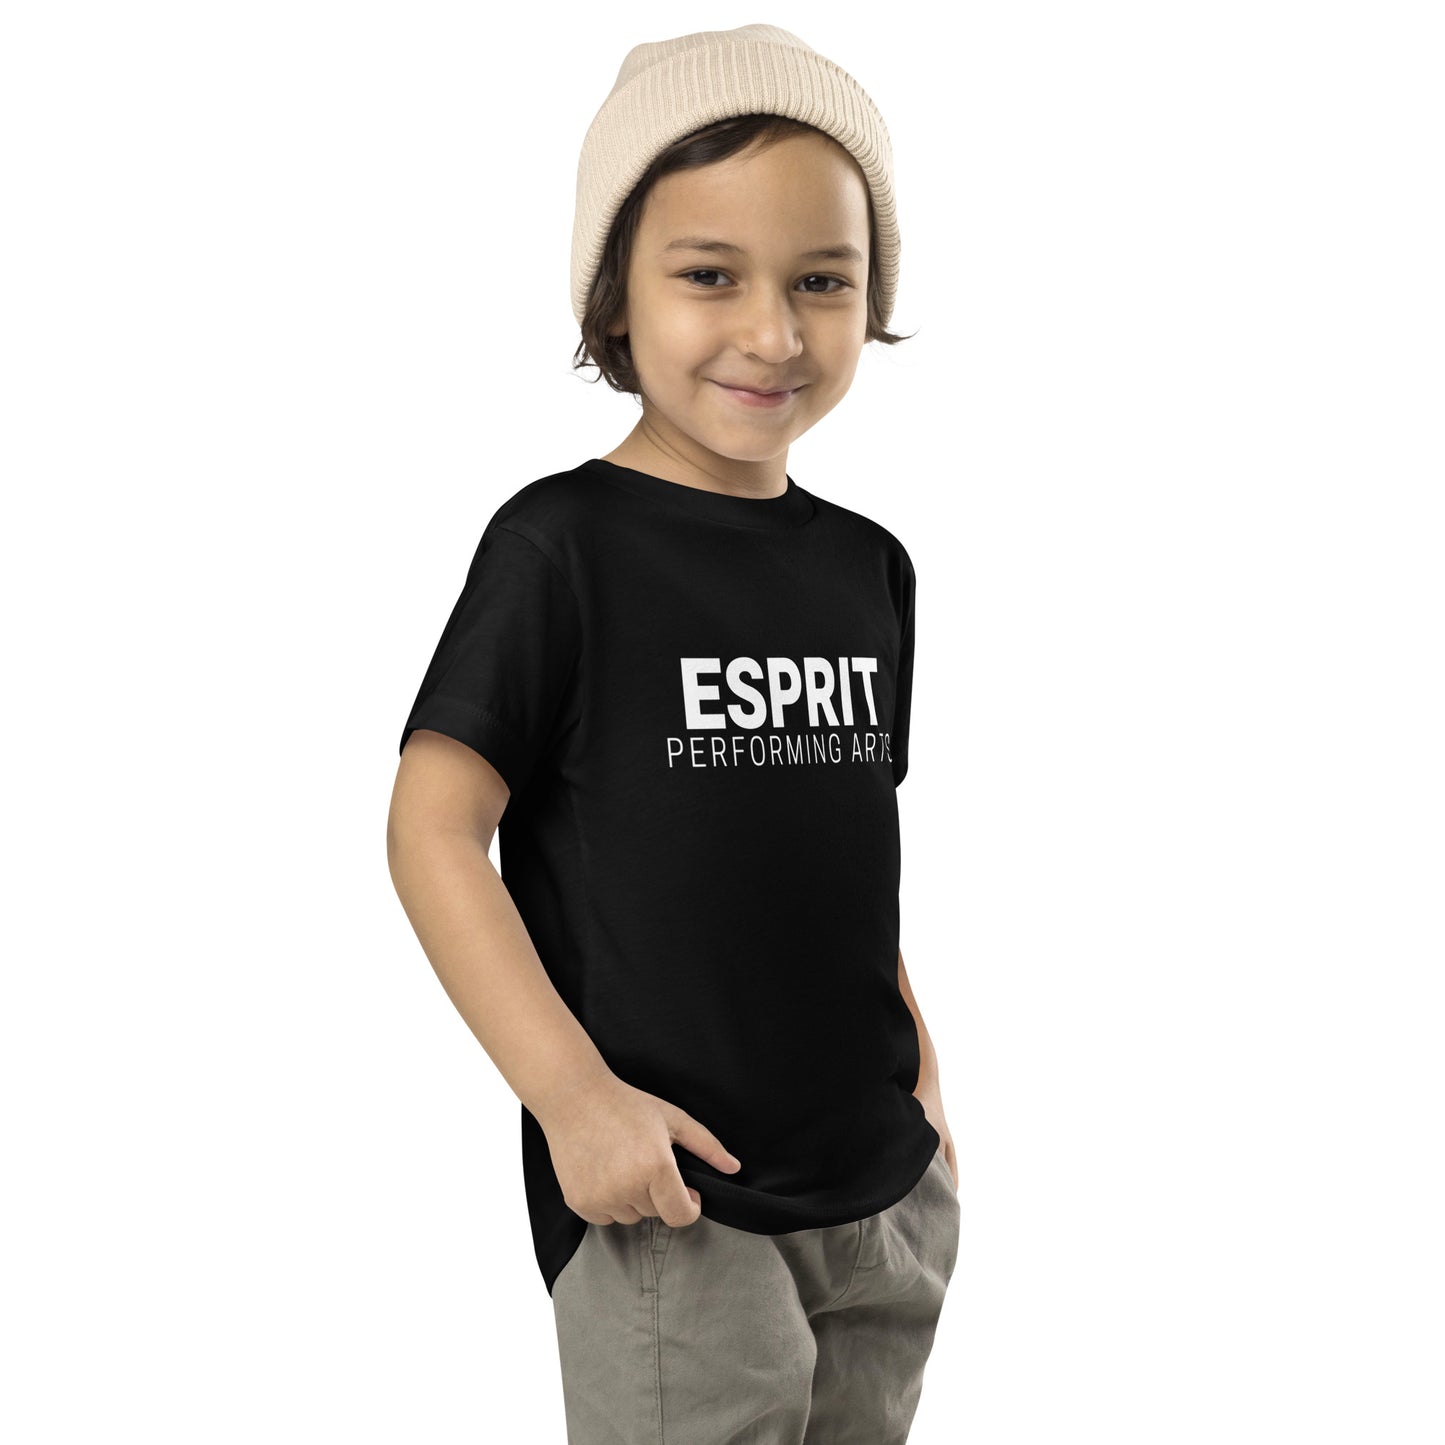 Esprit Performing Arts Logo T-Shirt - Toddler